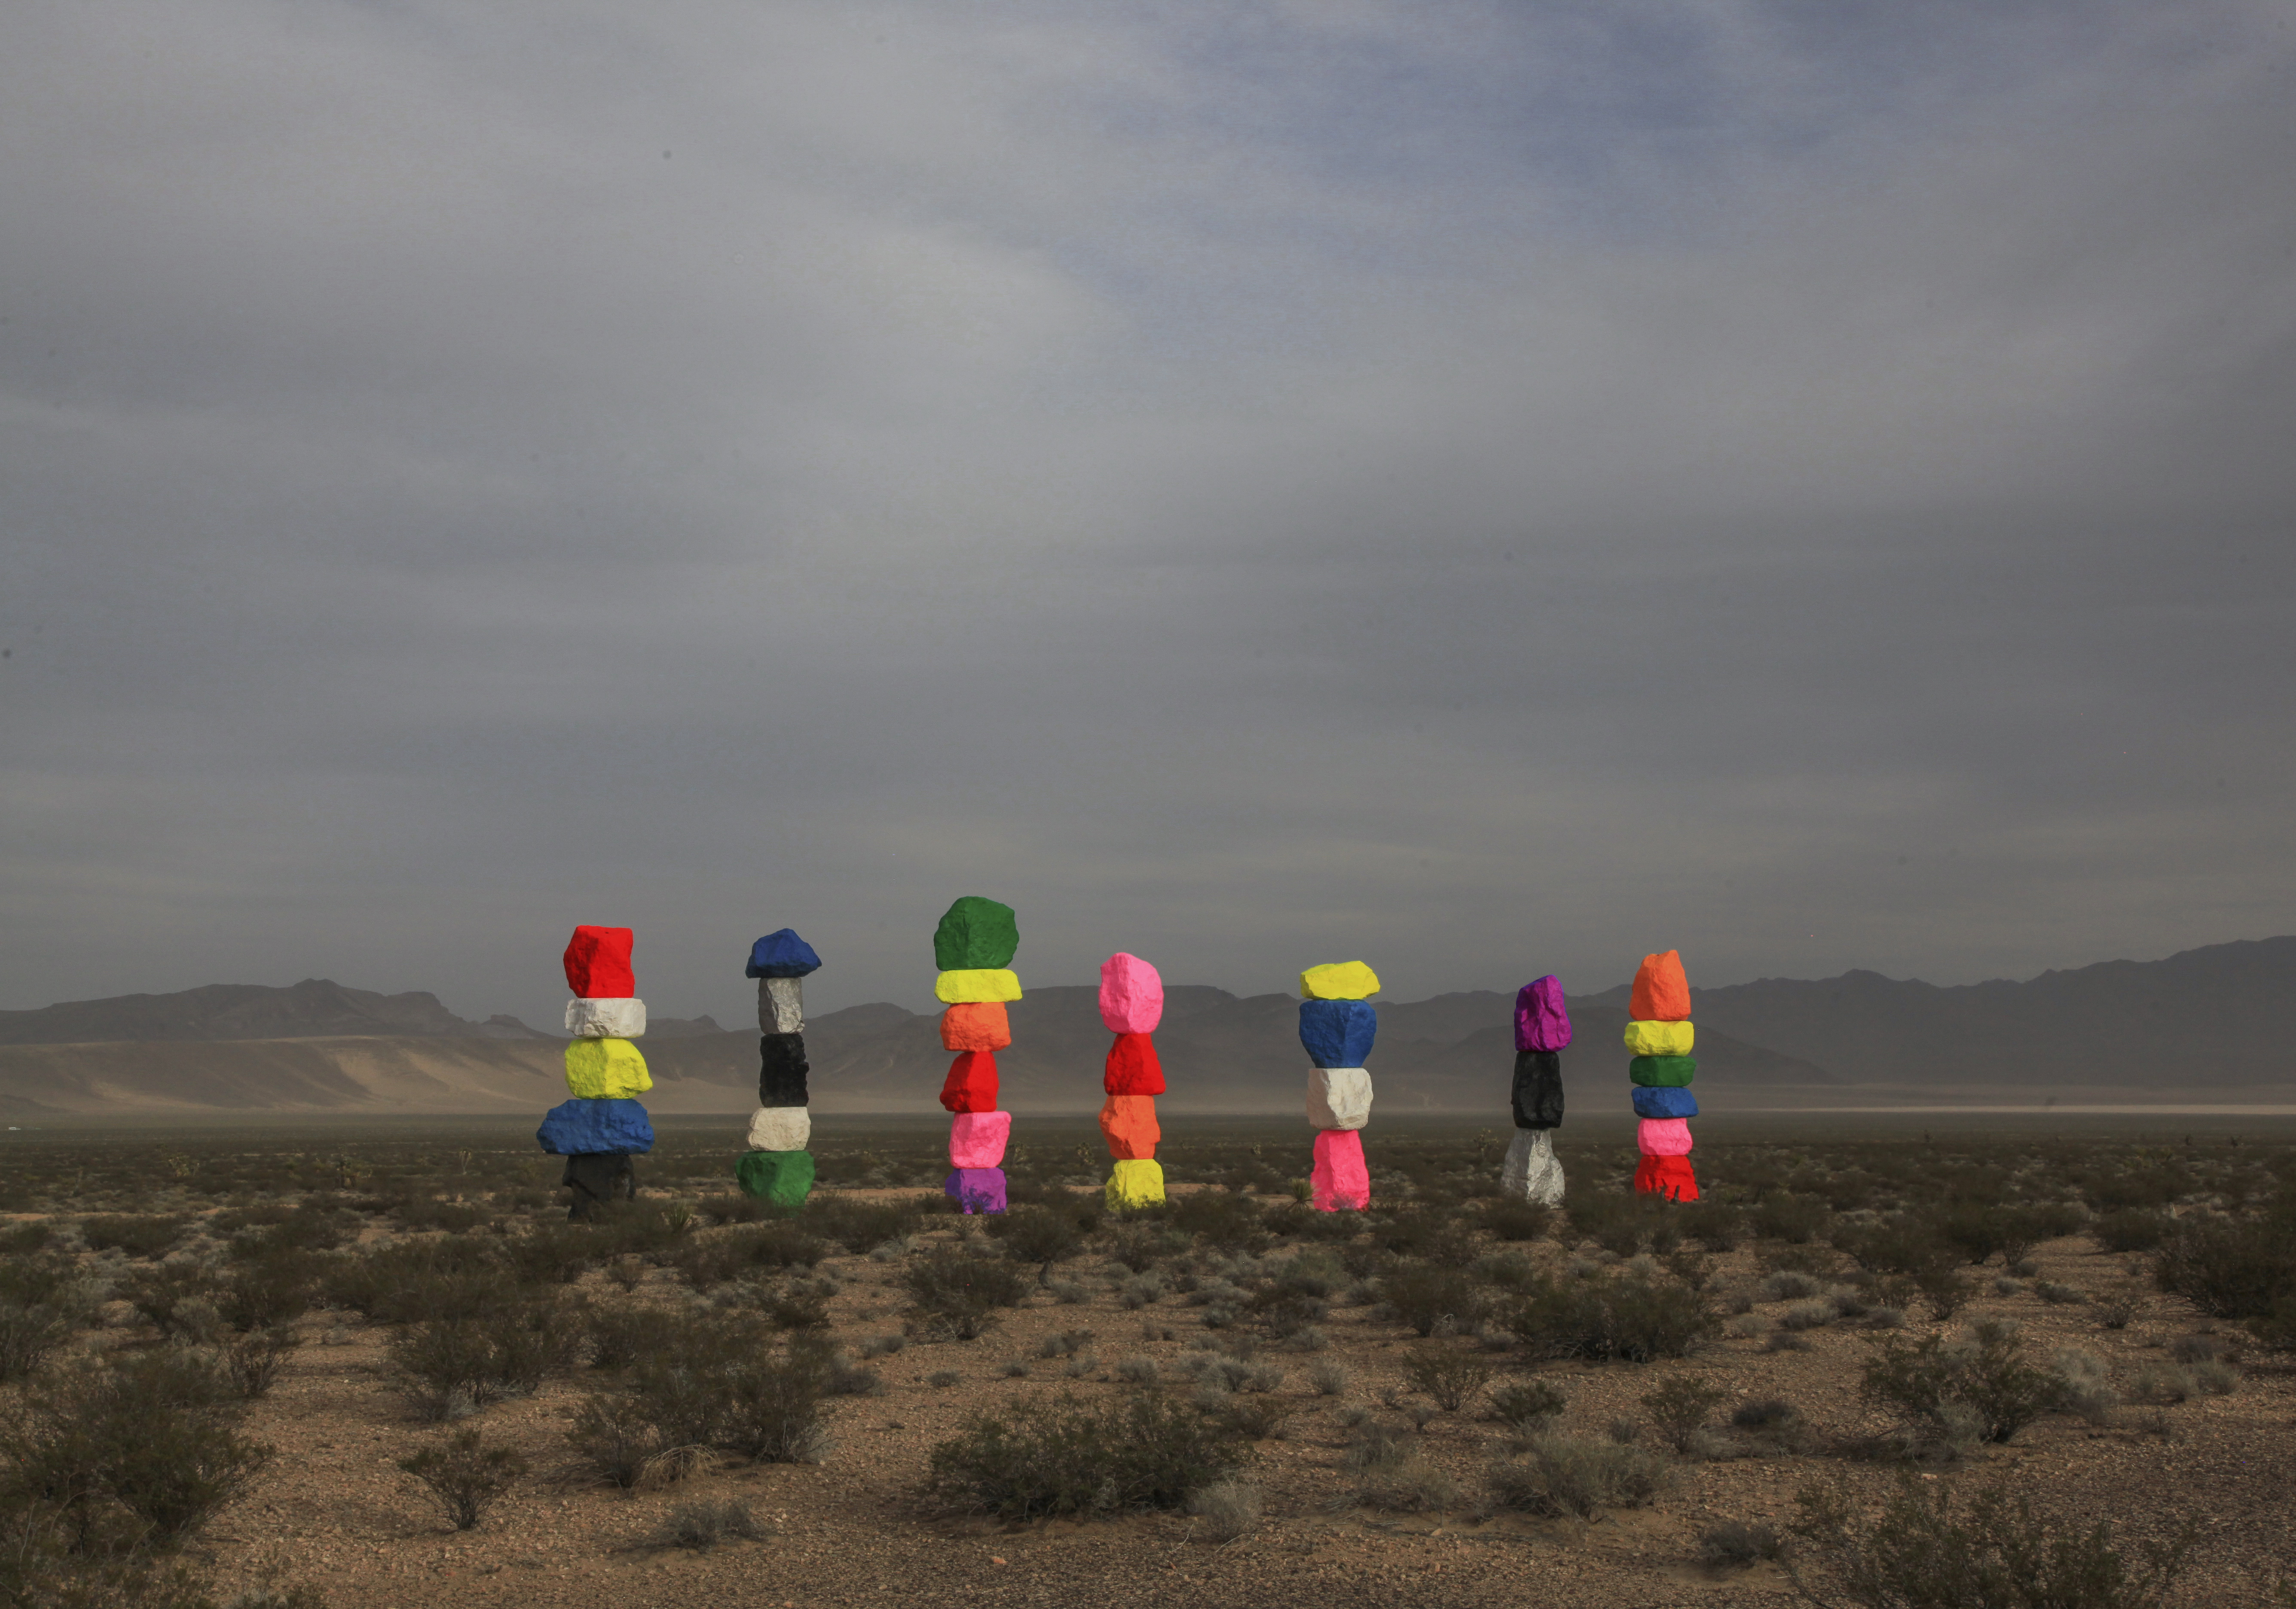 Ugo Rondinone's colorful rocks in Vegas – Public Delivery